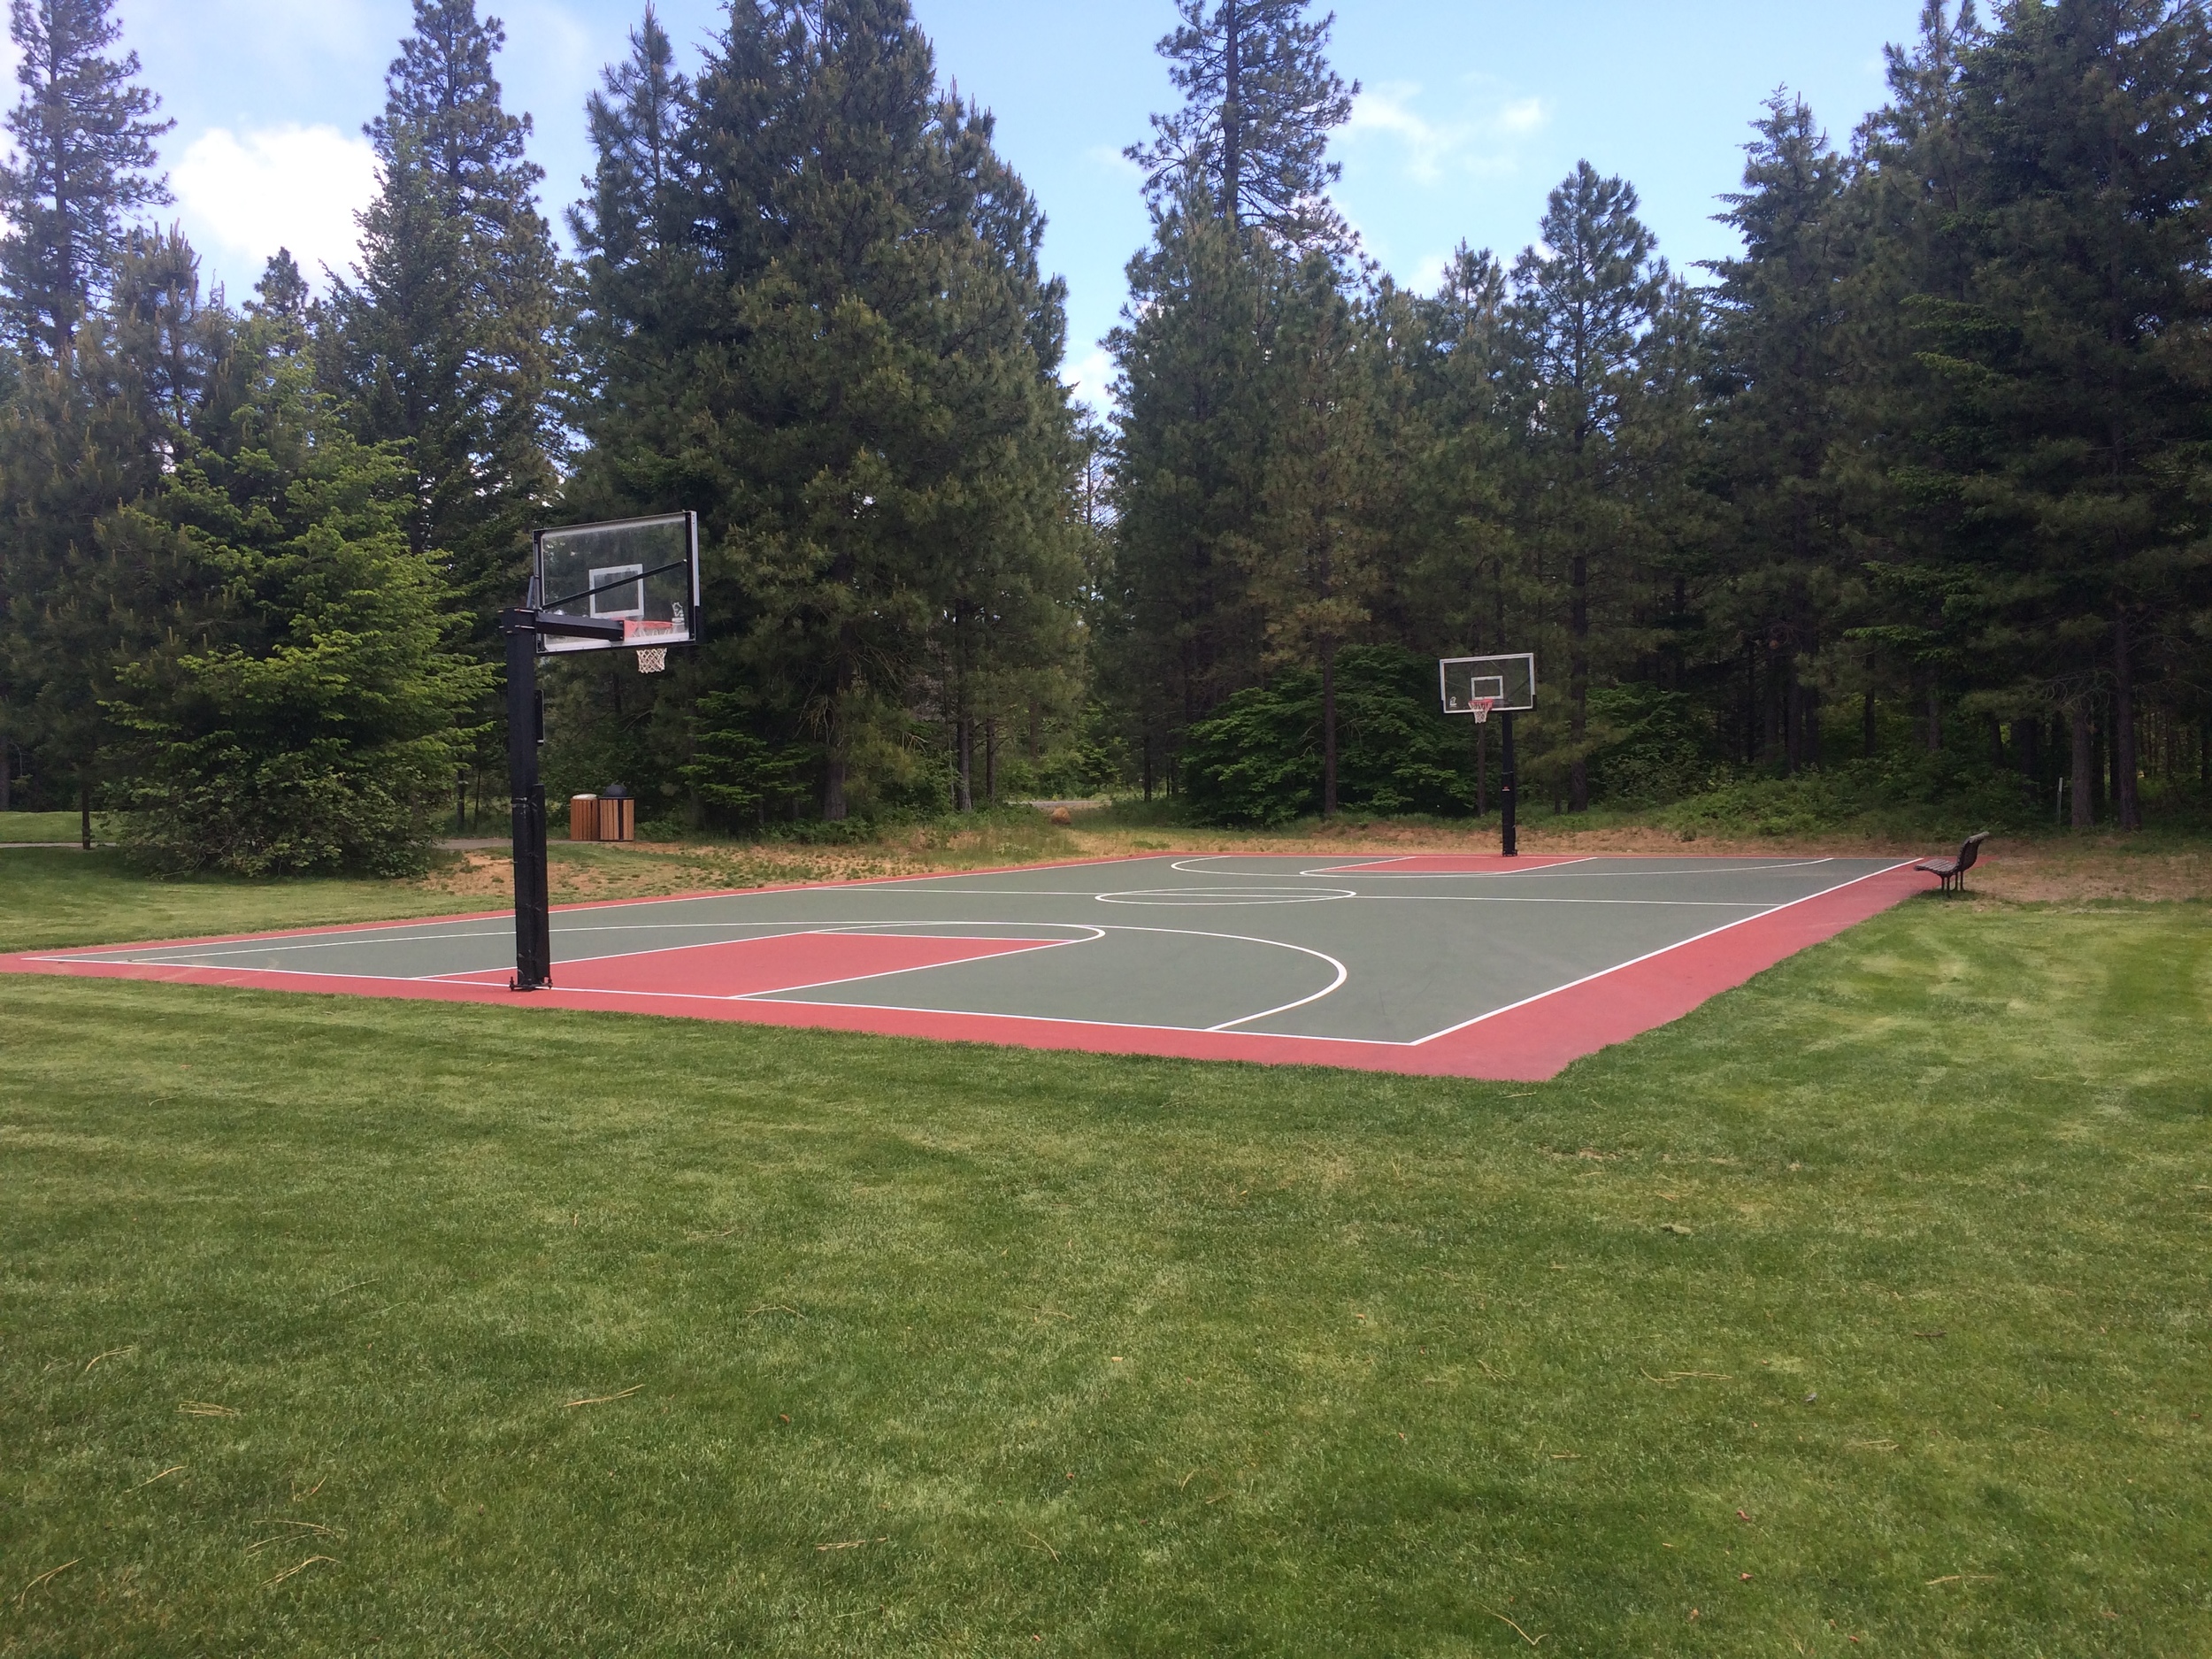 Basketball court at Battista's Meadow Park